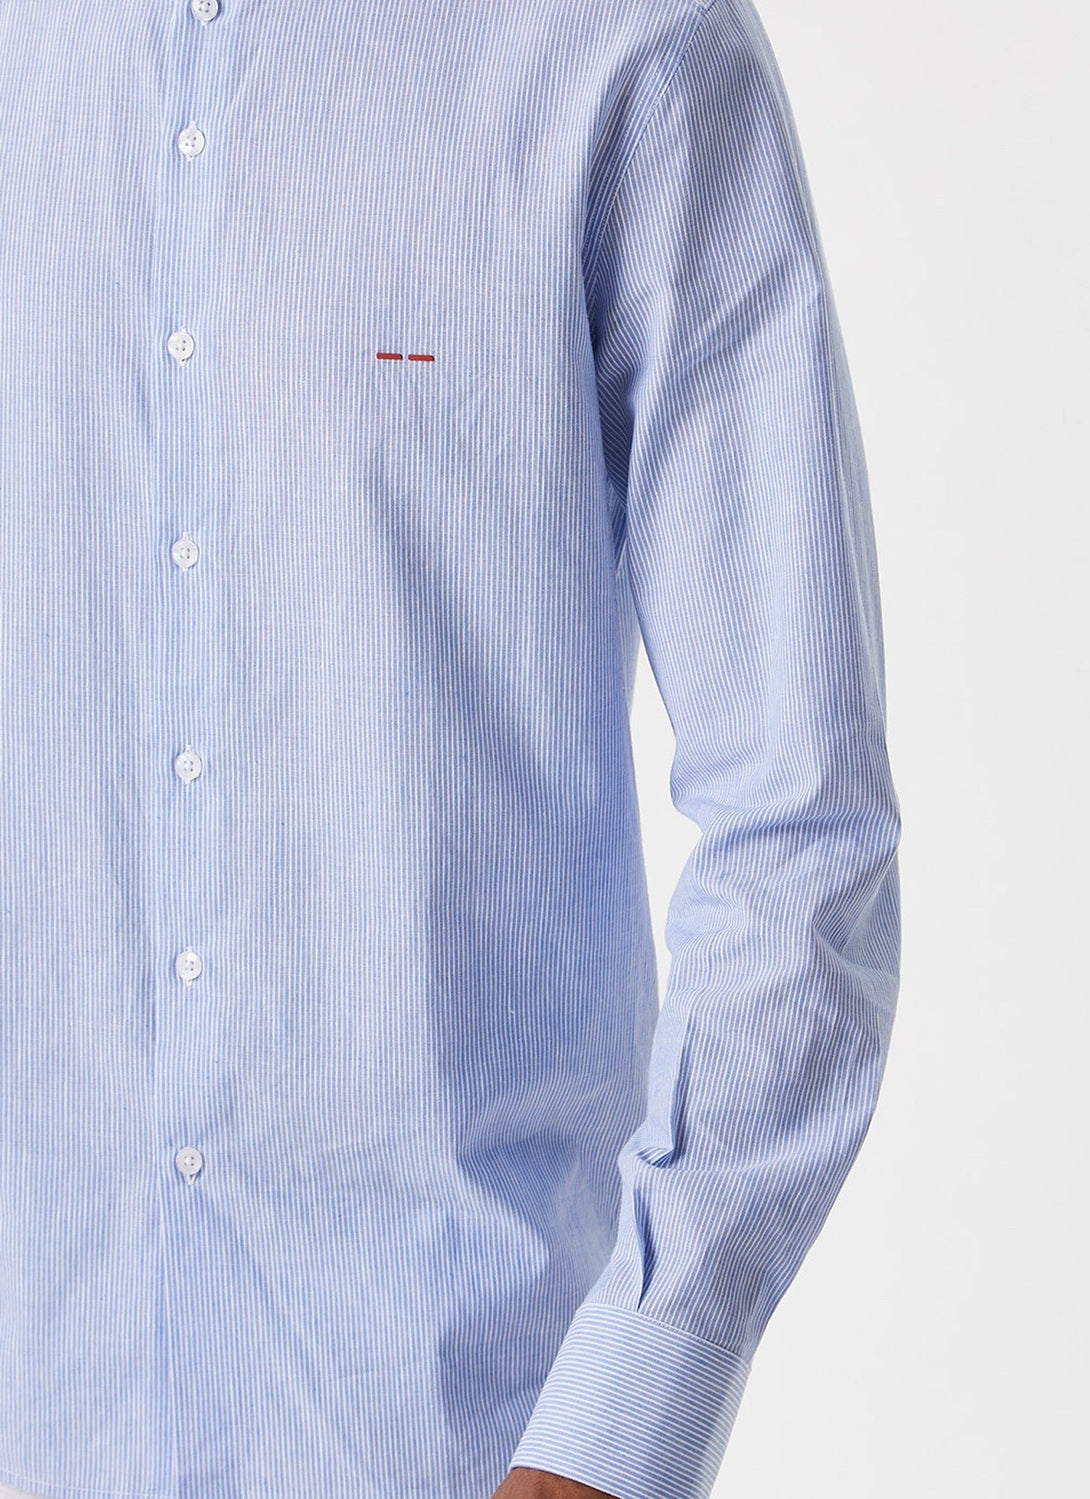 Men Long-Sleeve Shirt | White/Blue Long Sleeve Shirt by Spanish designer Adolfo Dominguez